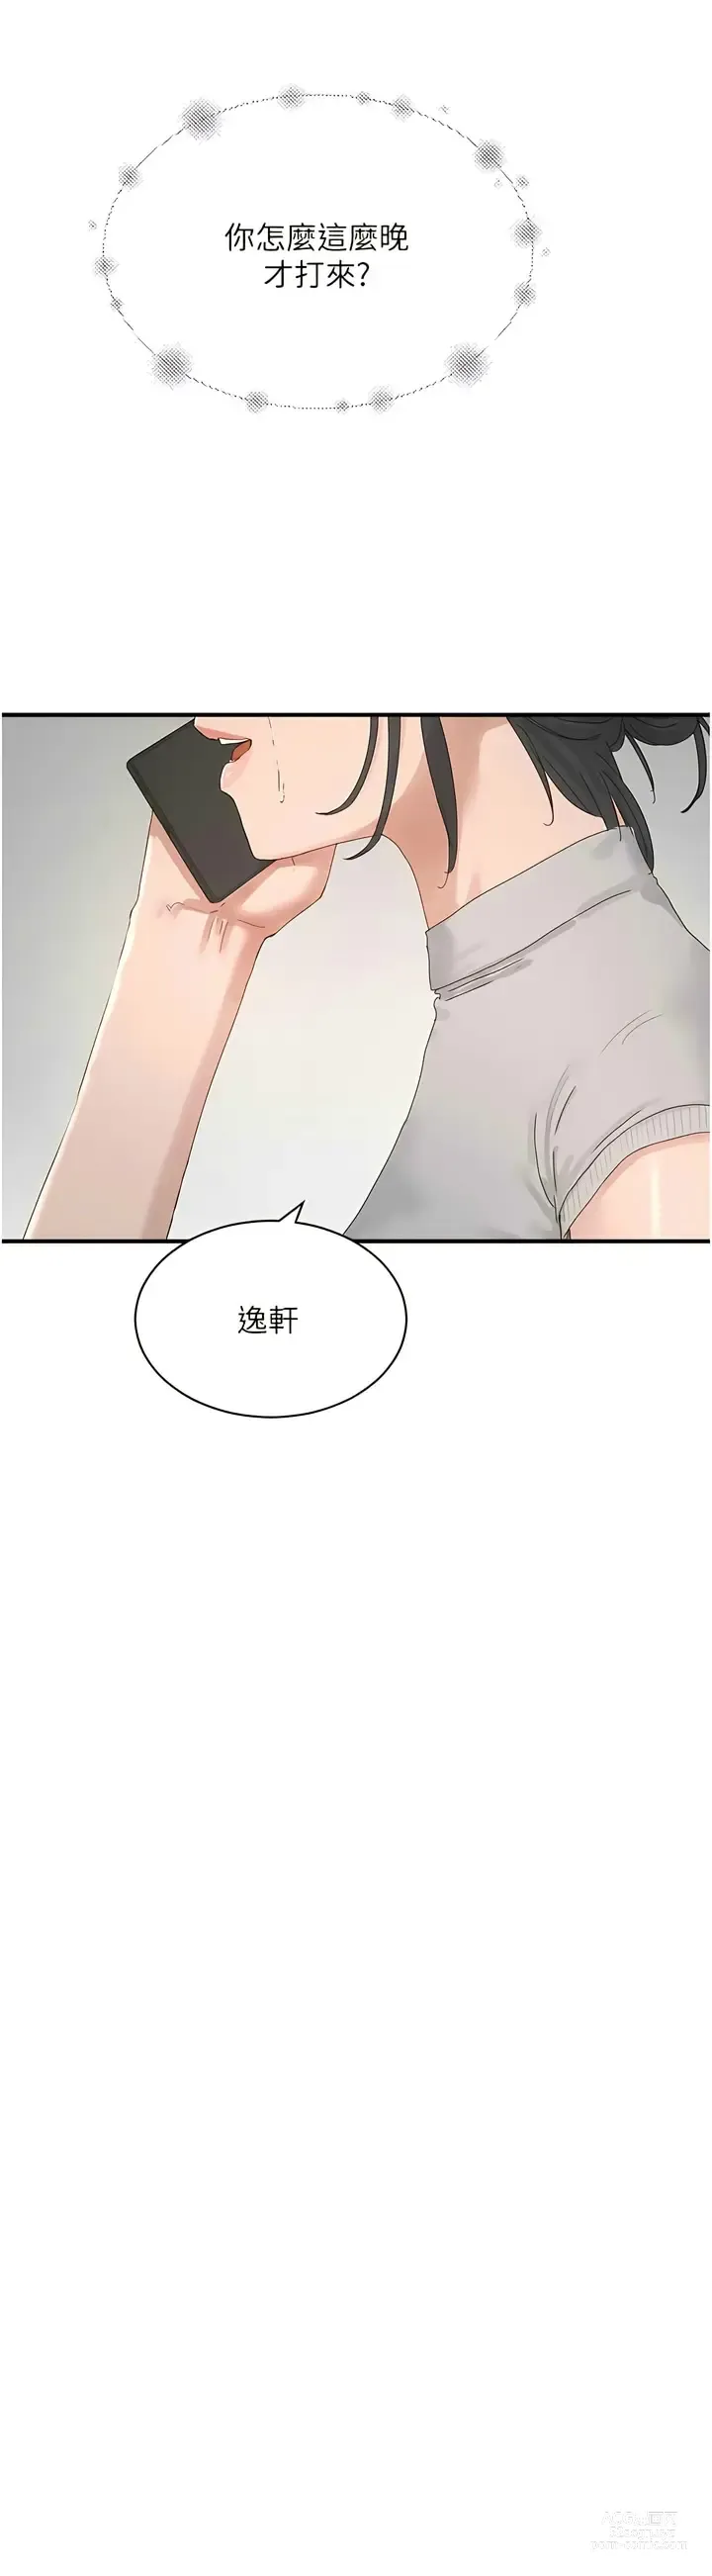 Page 932 of manga 夏日深处/Summer of Love 61-86